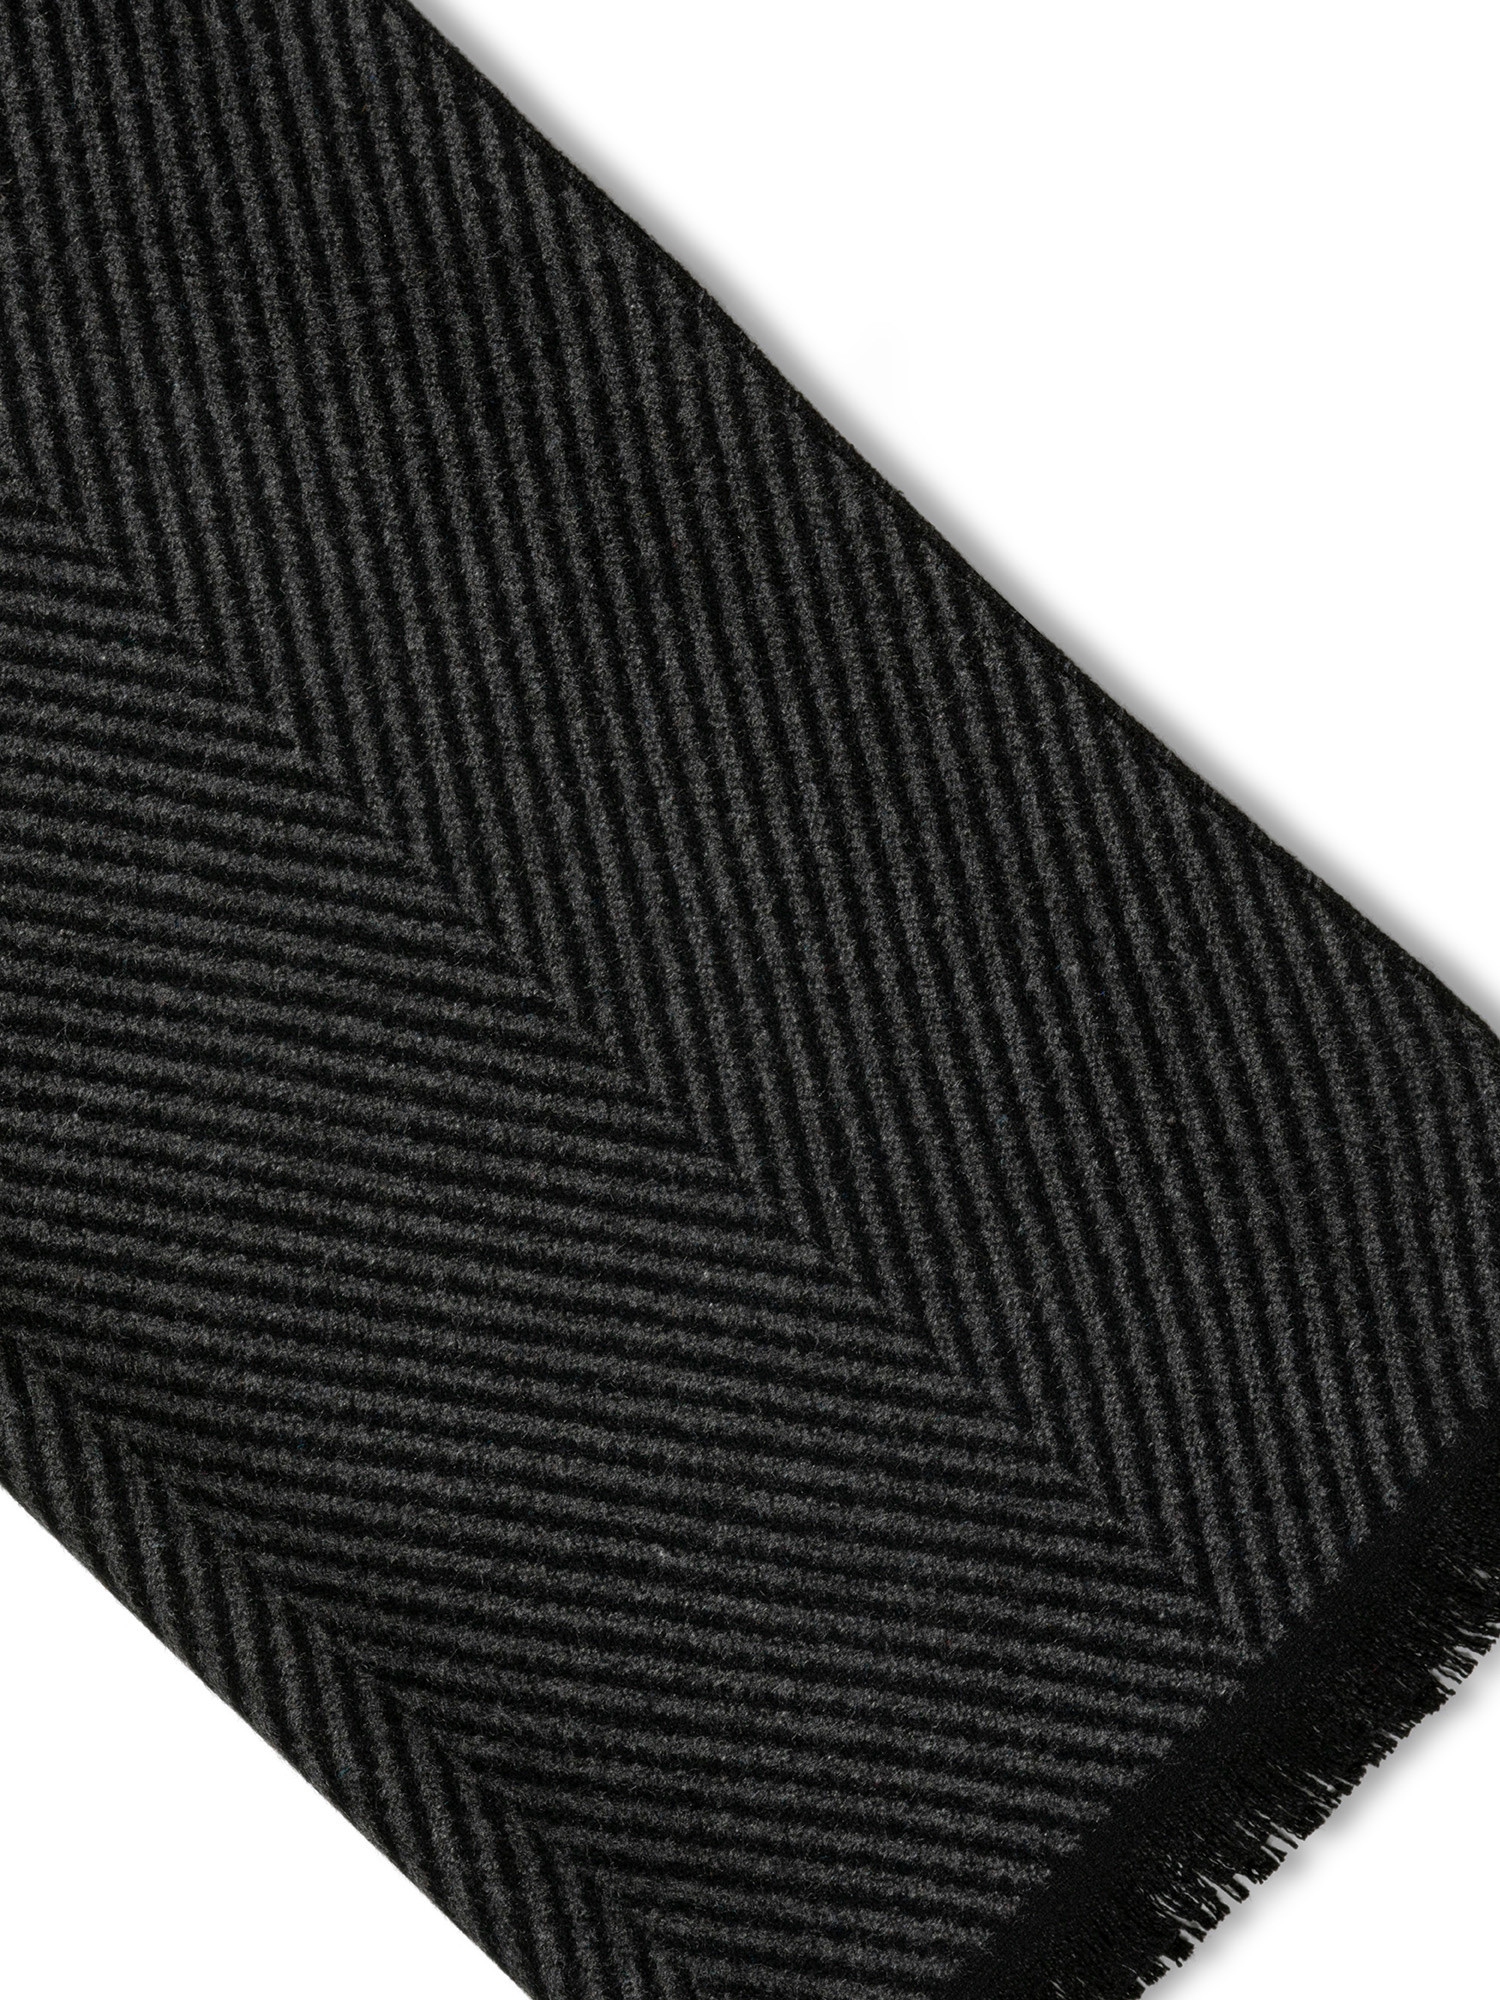 Luca D'Altieri - Scarf in herringbone fabric, Black, large image number 1